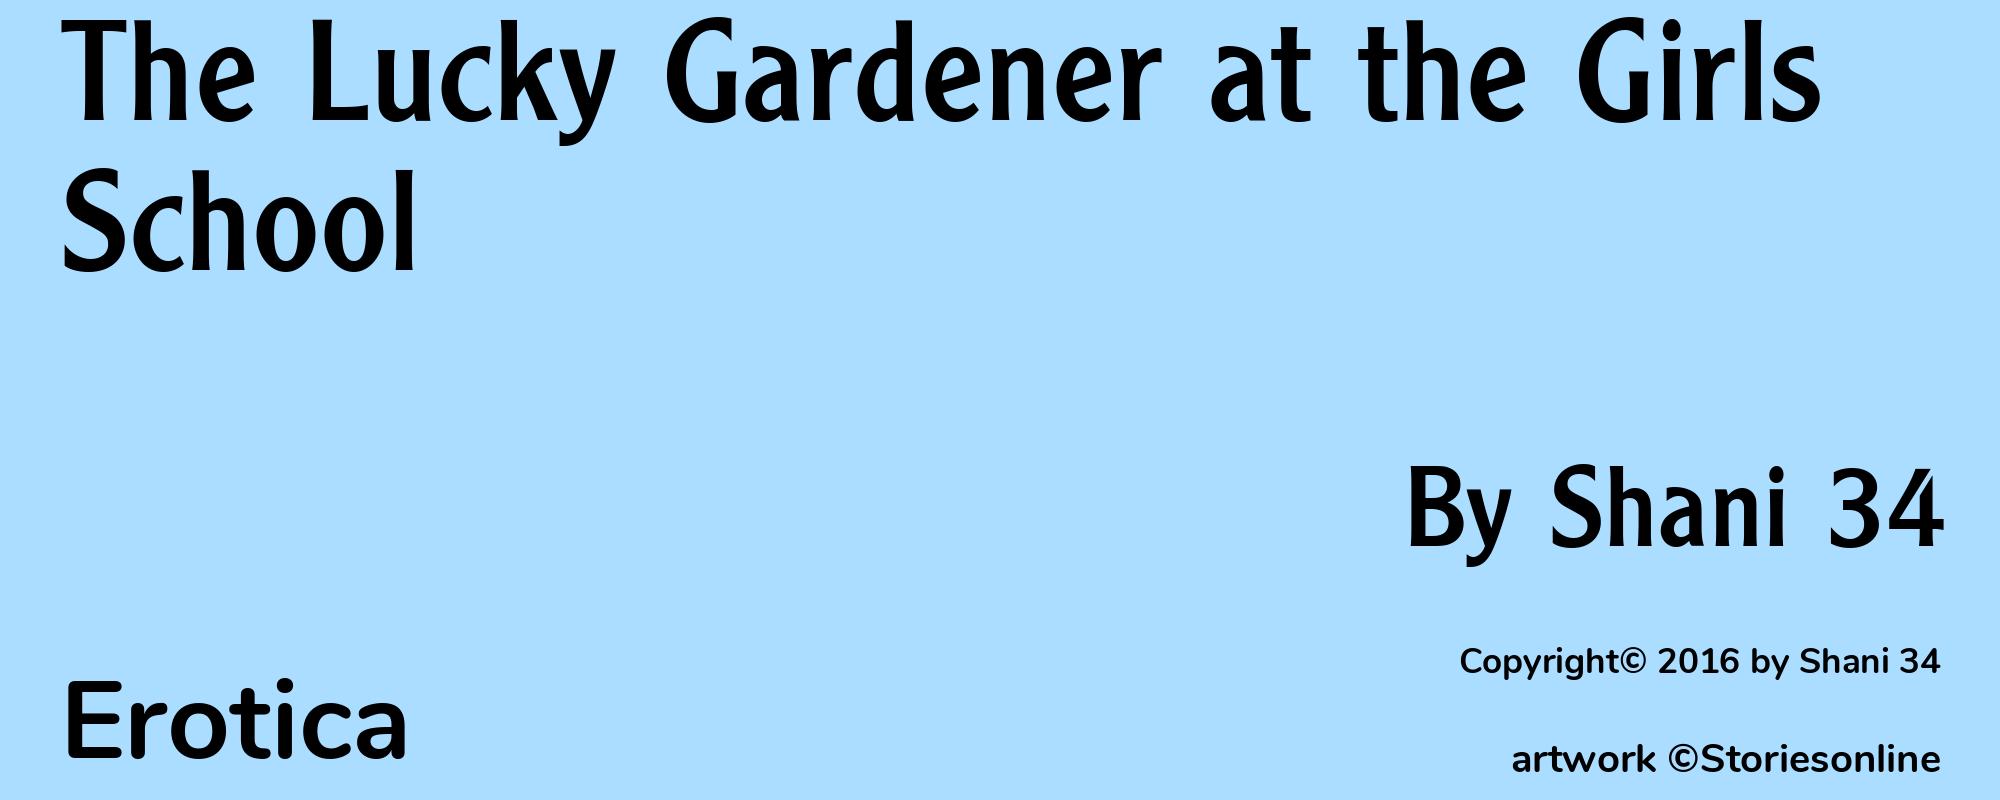 The Lucky Gardener at the Girls School - Cover